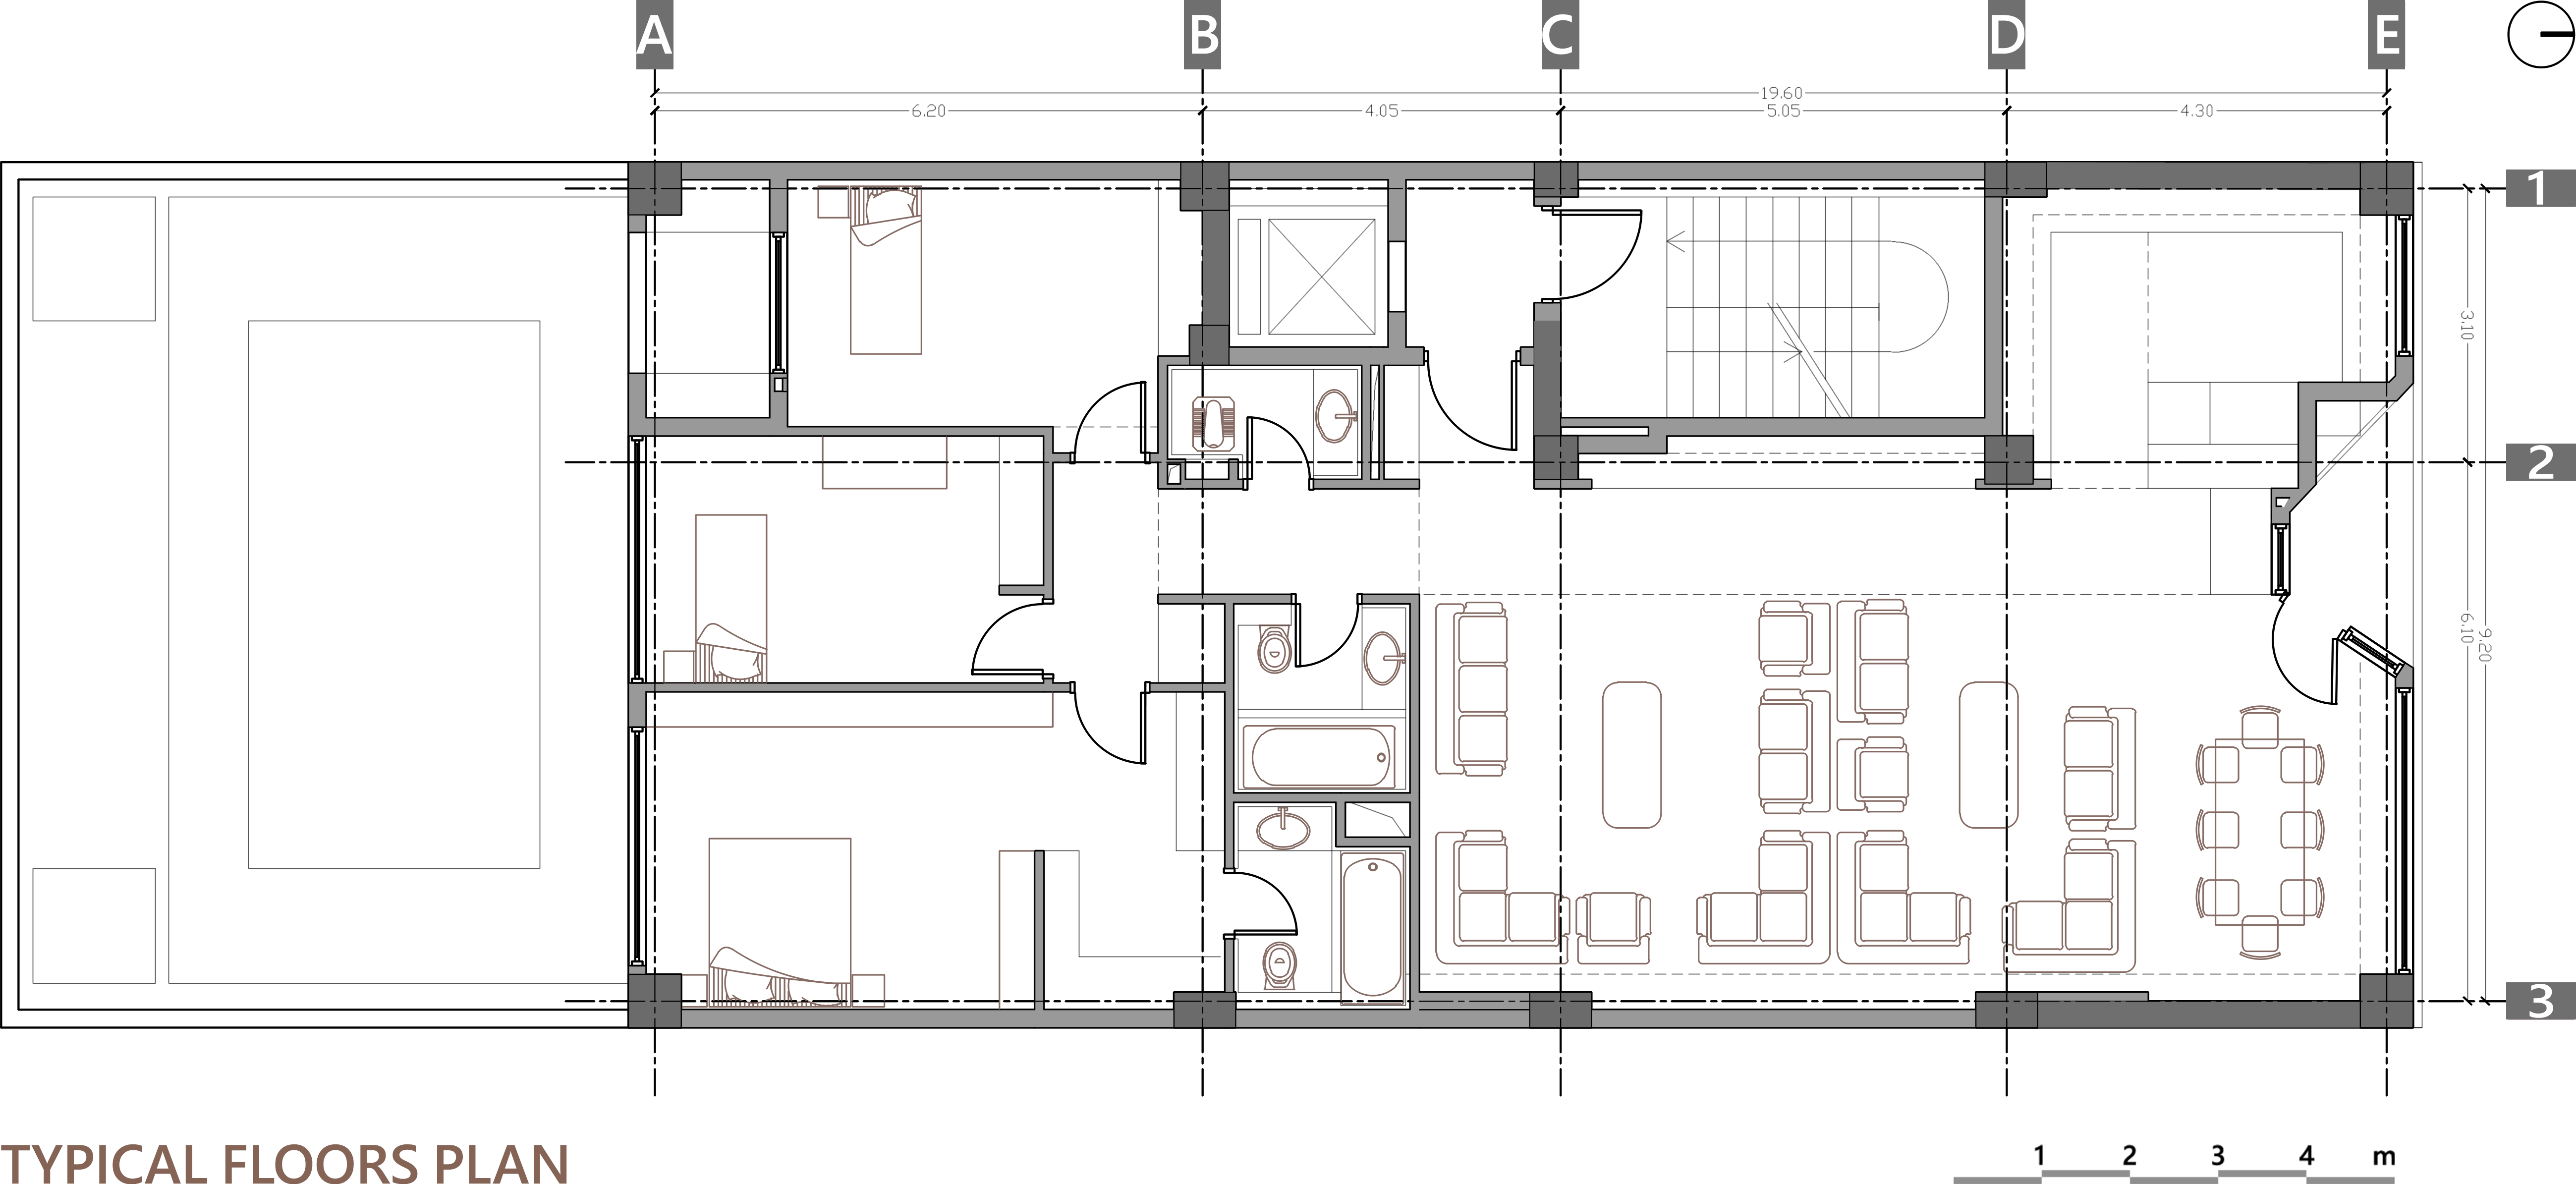 typical floor plan, 93 st. residentail aratment